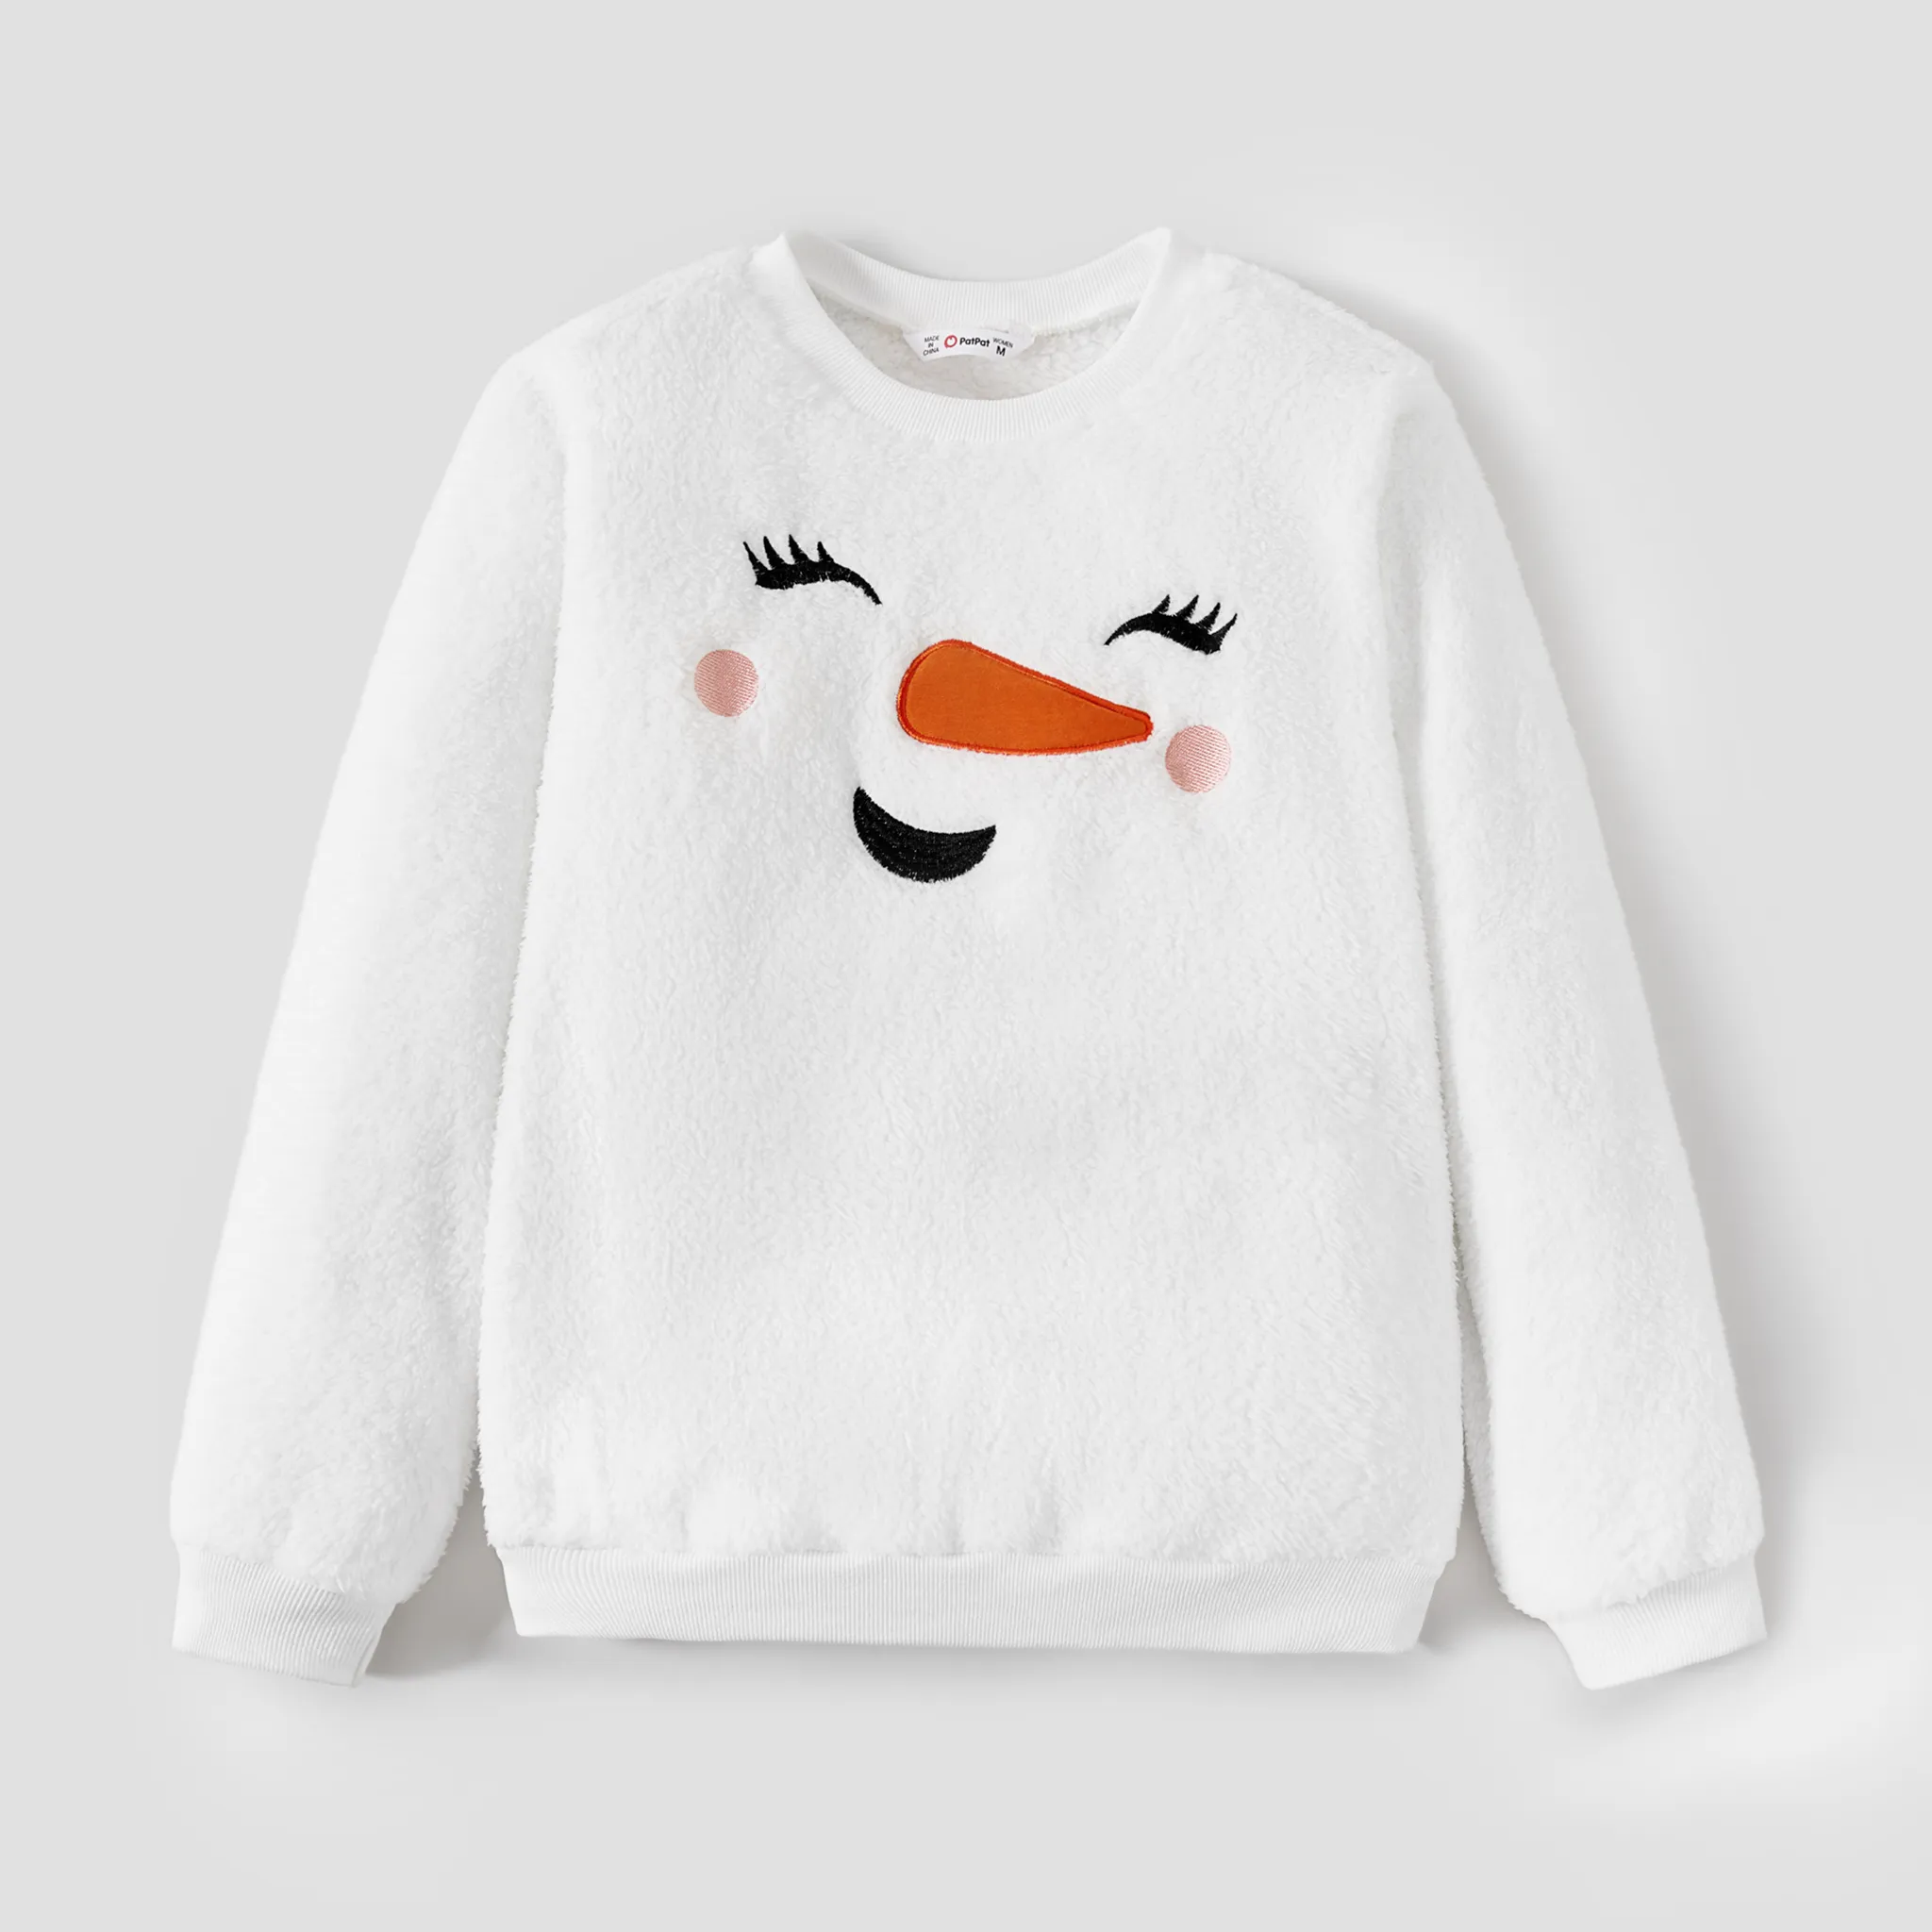 Christmas Family Matching Snowman Fleece Tops